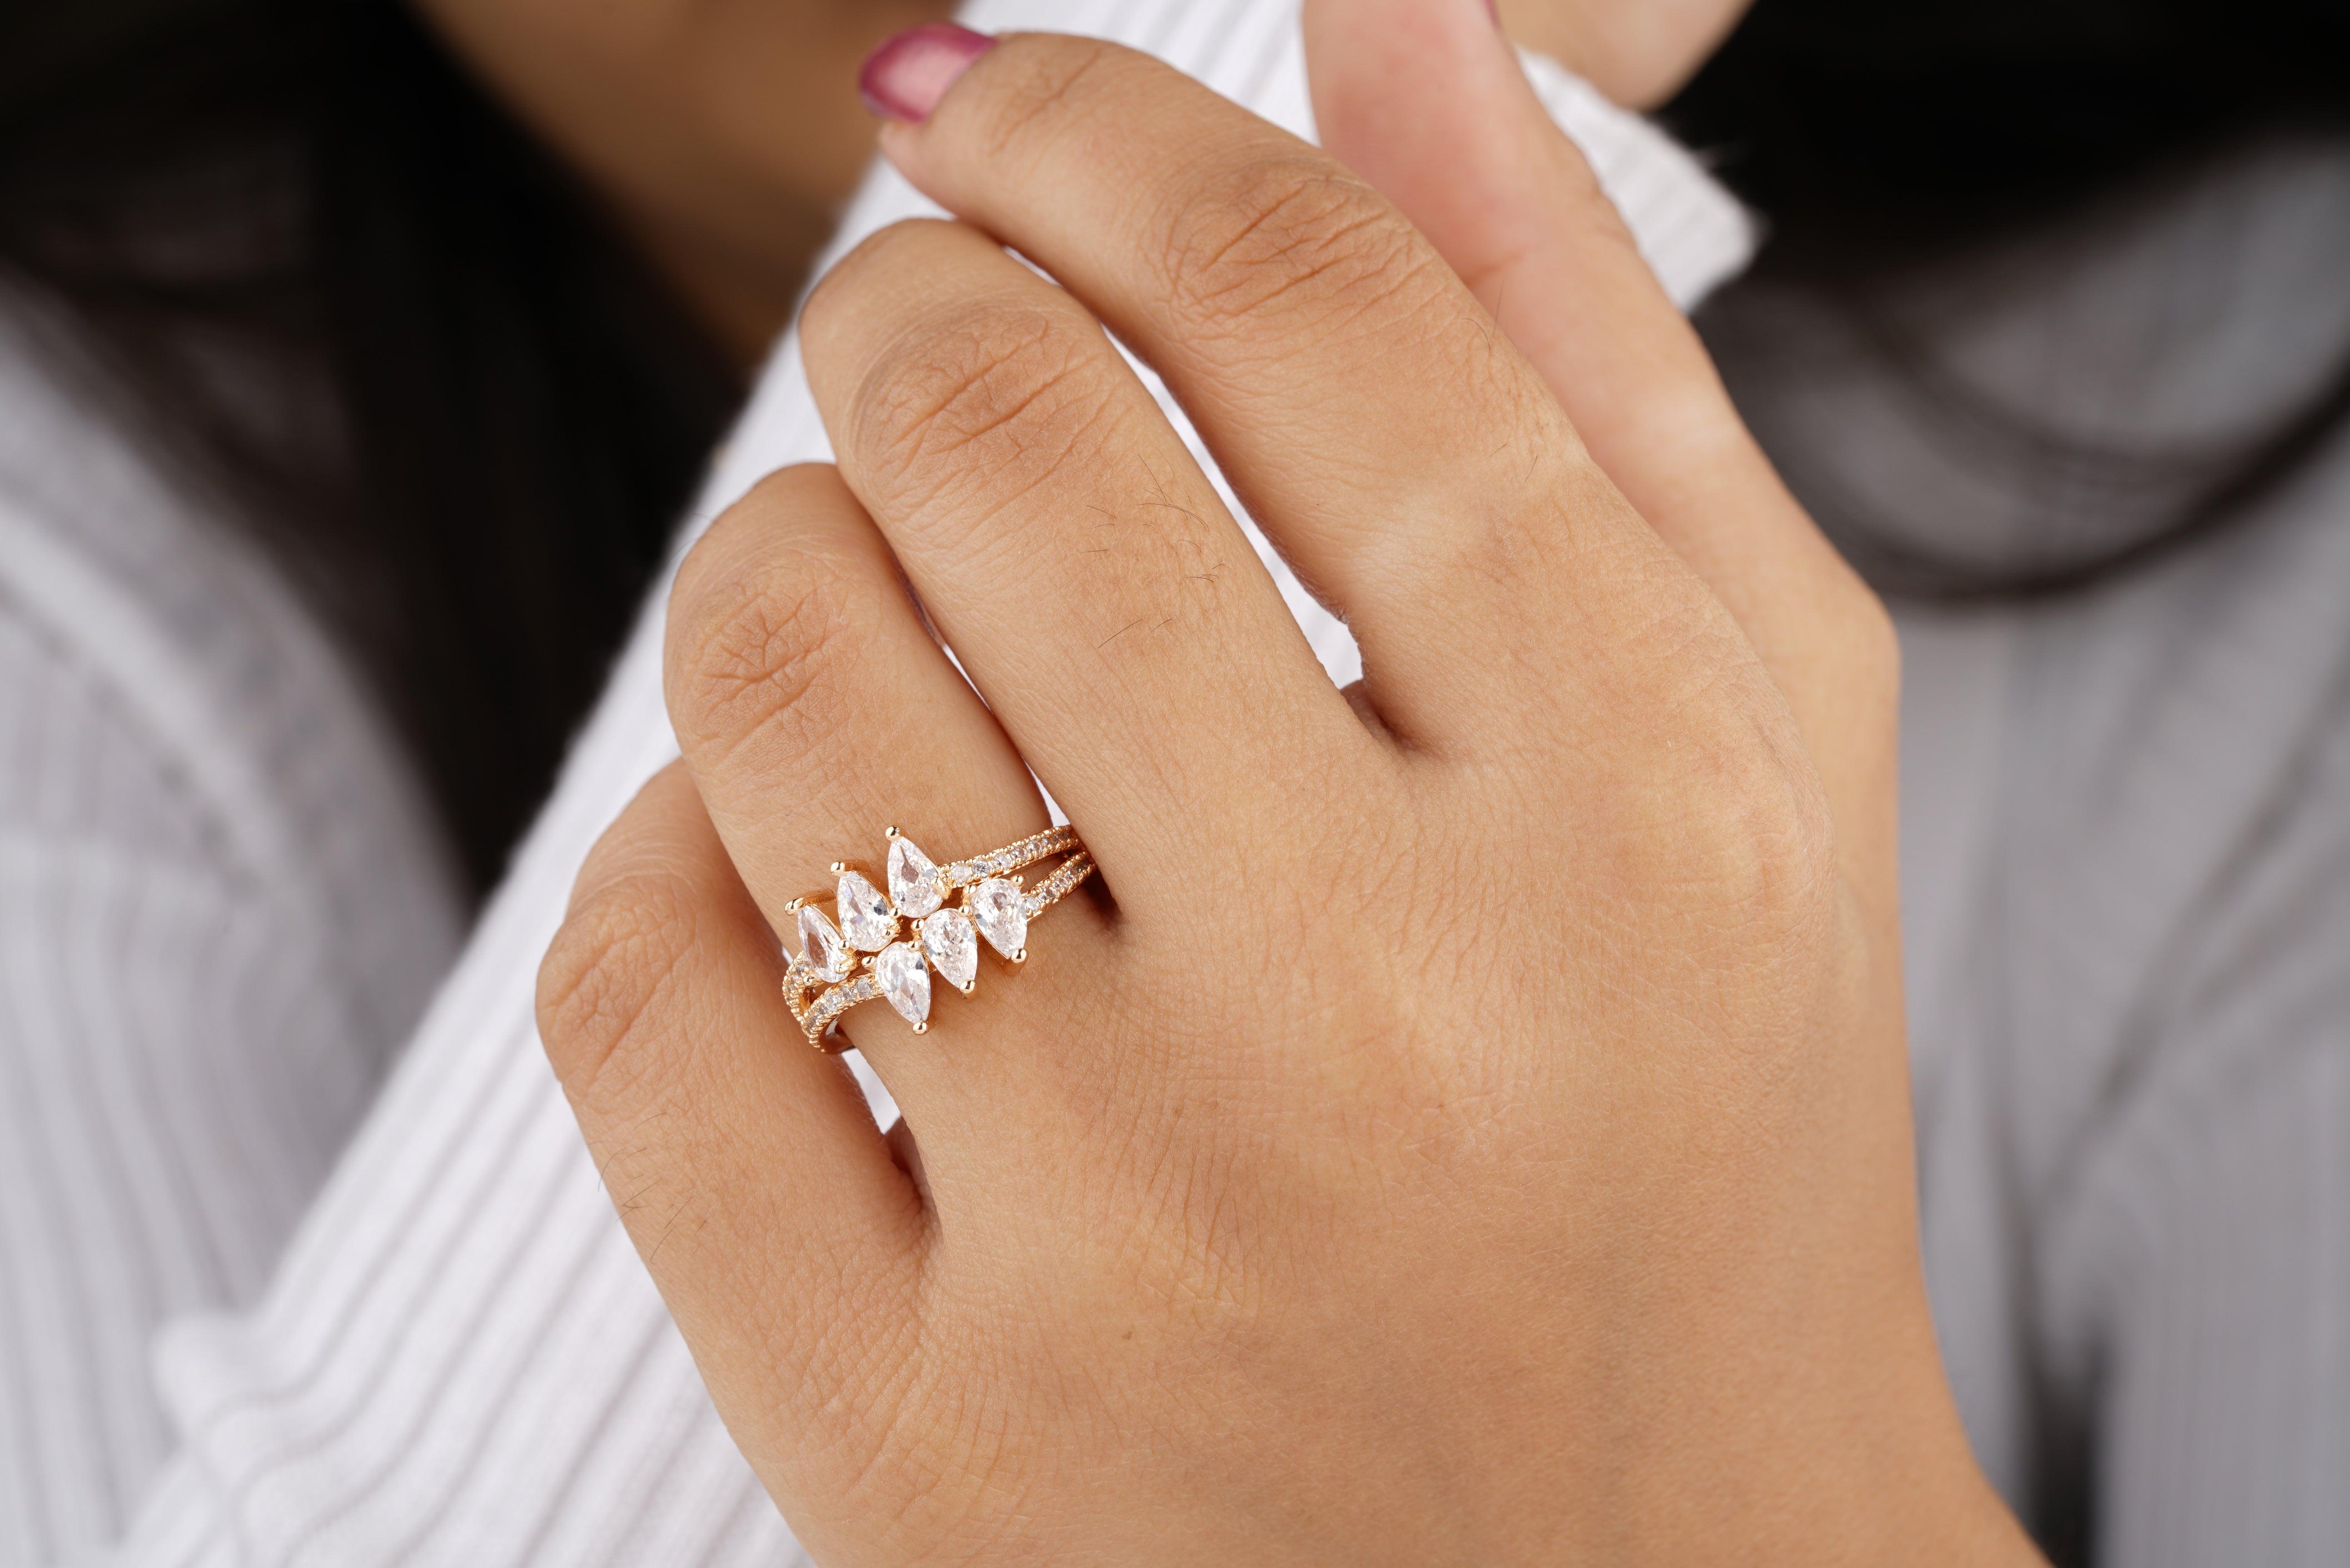 Unique Pear Cut Moissanite Diamond Cluster Wedding Ring - Eurekalook